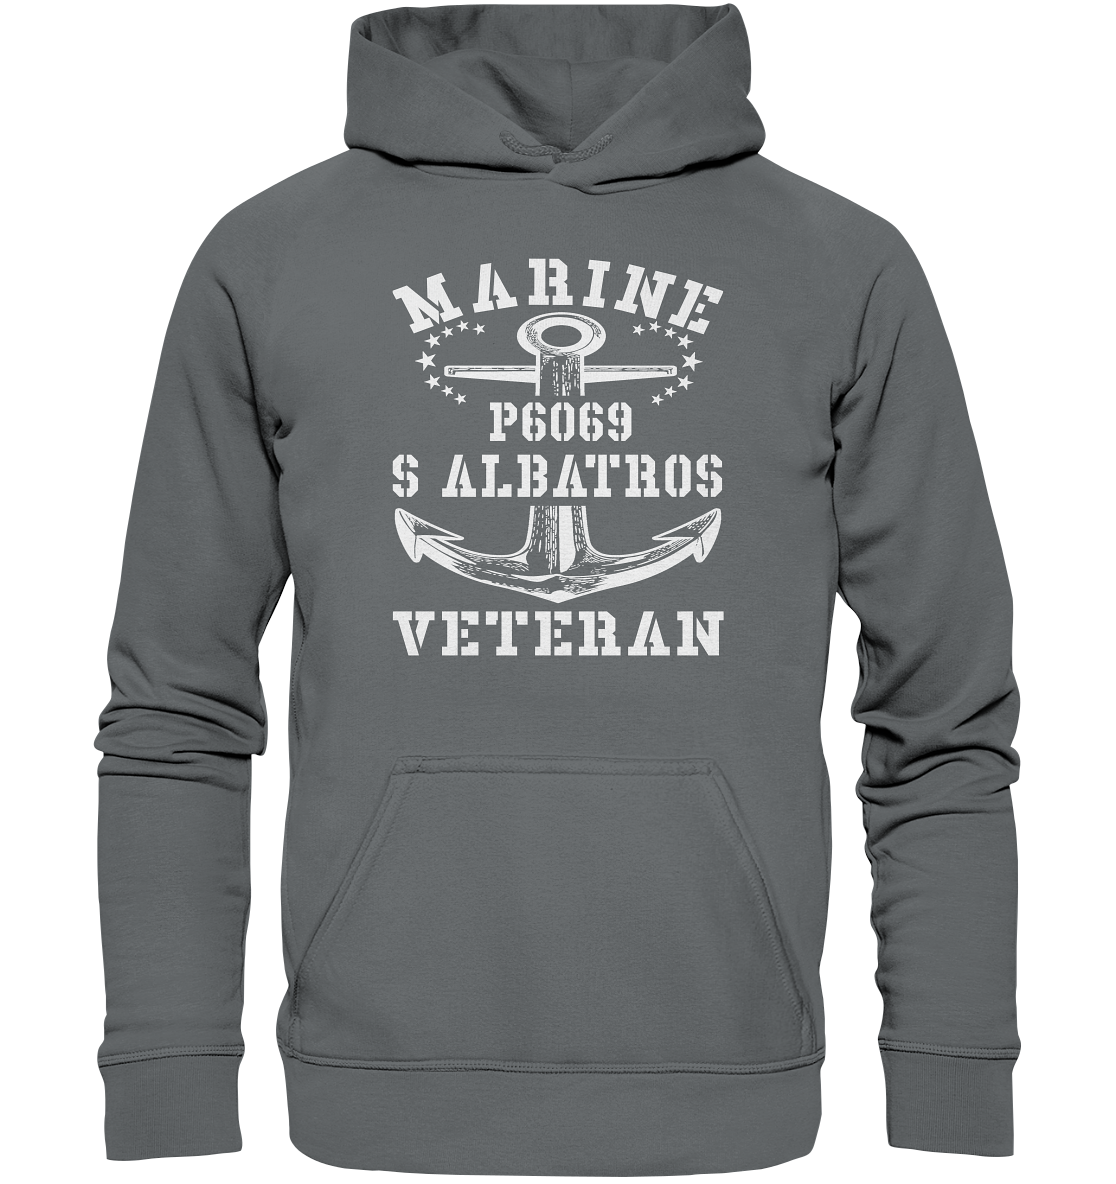 P6069 S ALBATROS Marine Veteran - Basic Unisex Hoodie